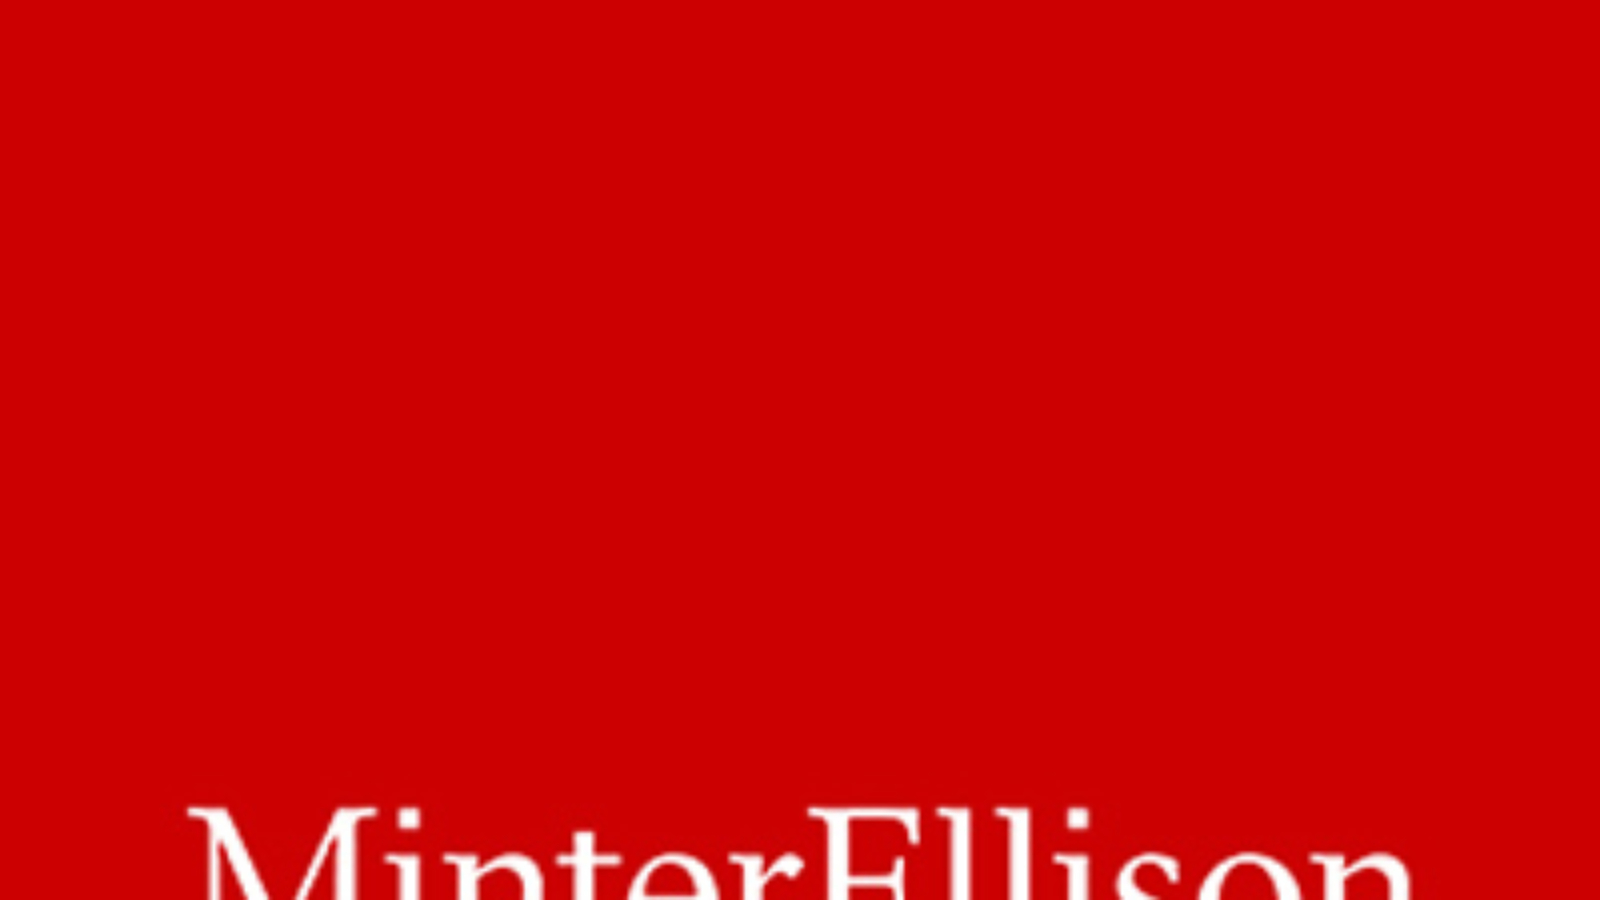 Minter-Ellison-Logo